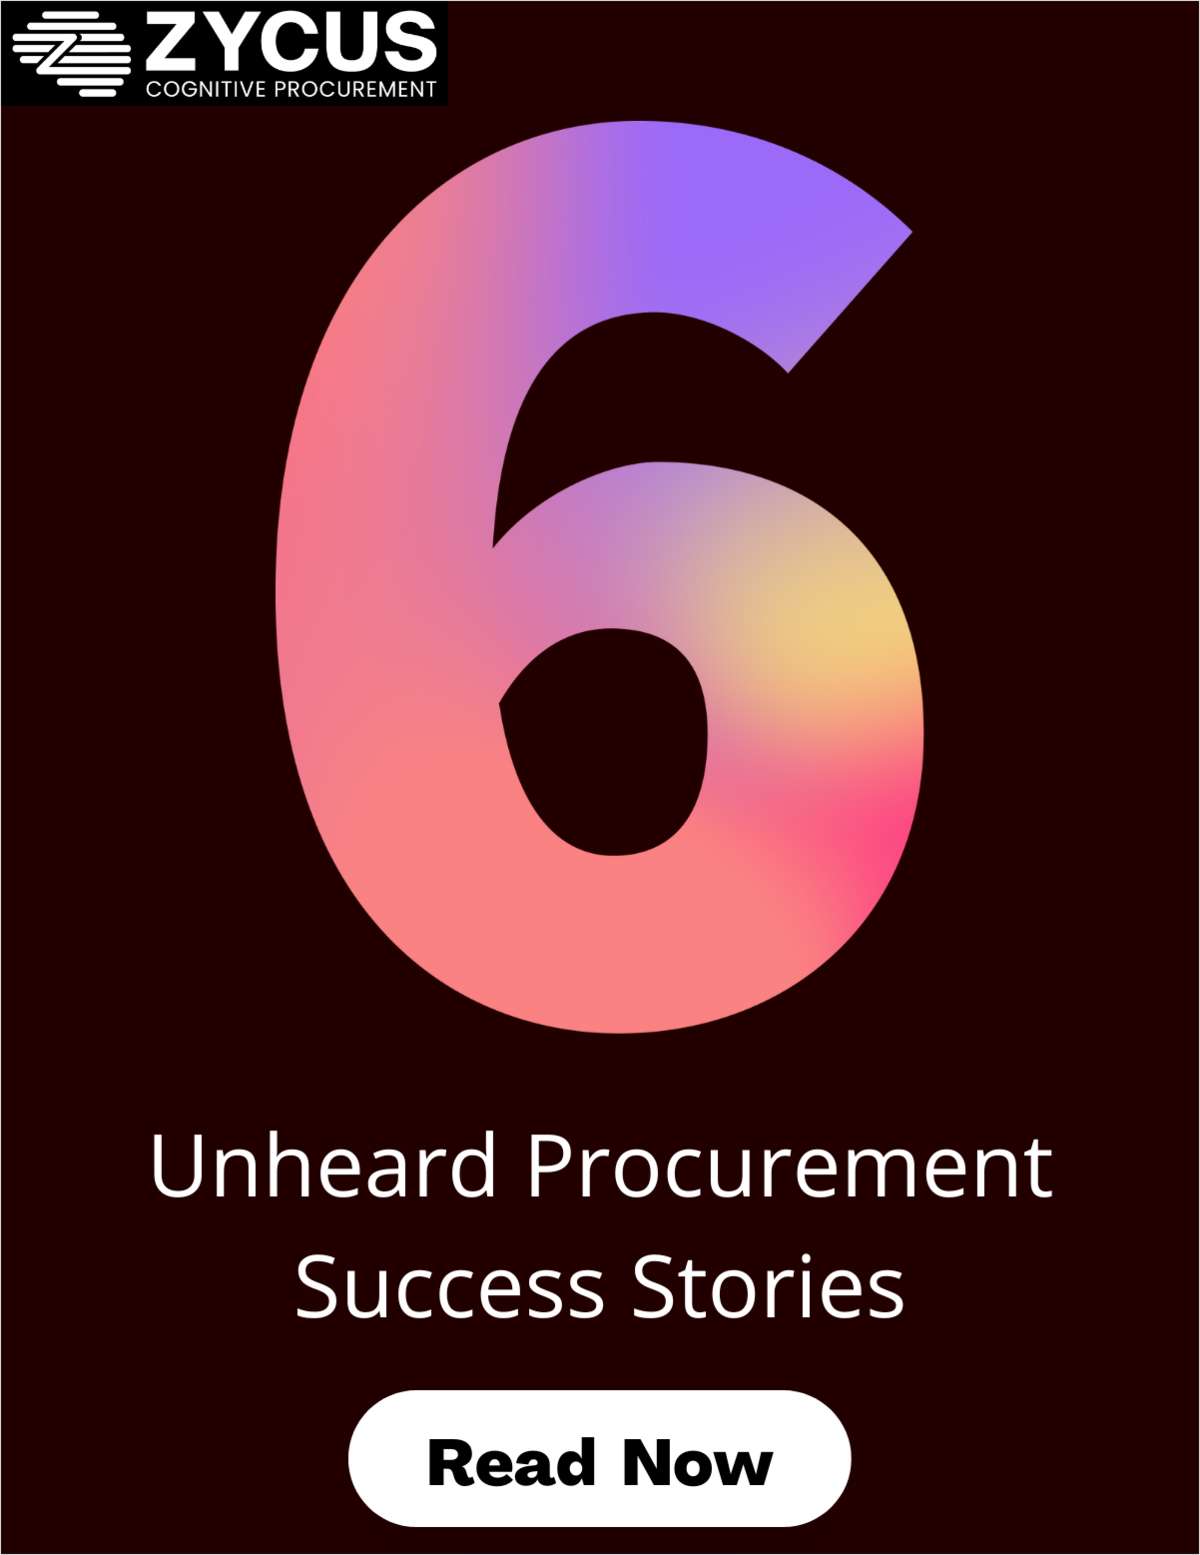 6 Successful Procurement Transformation Stories